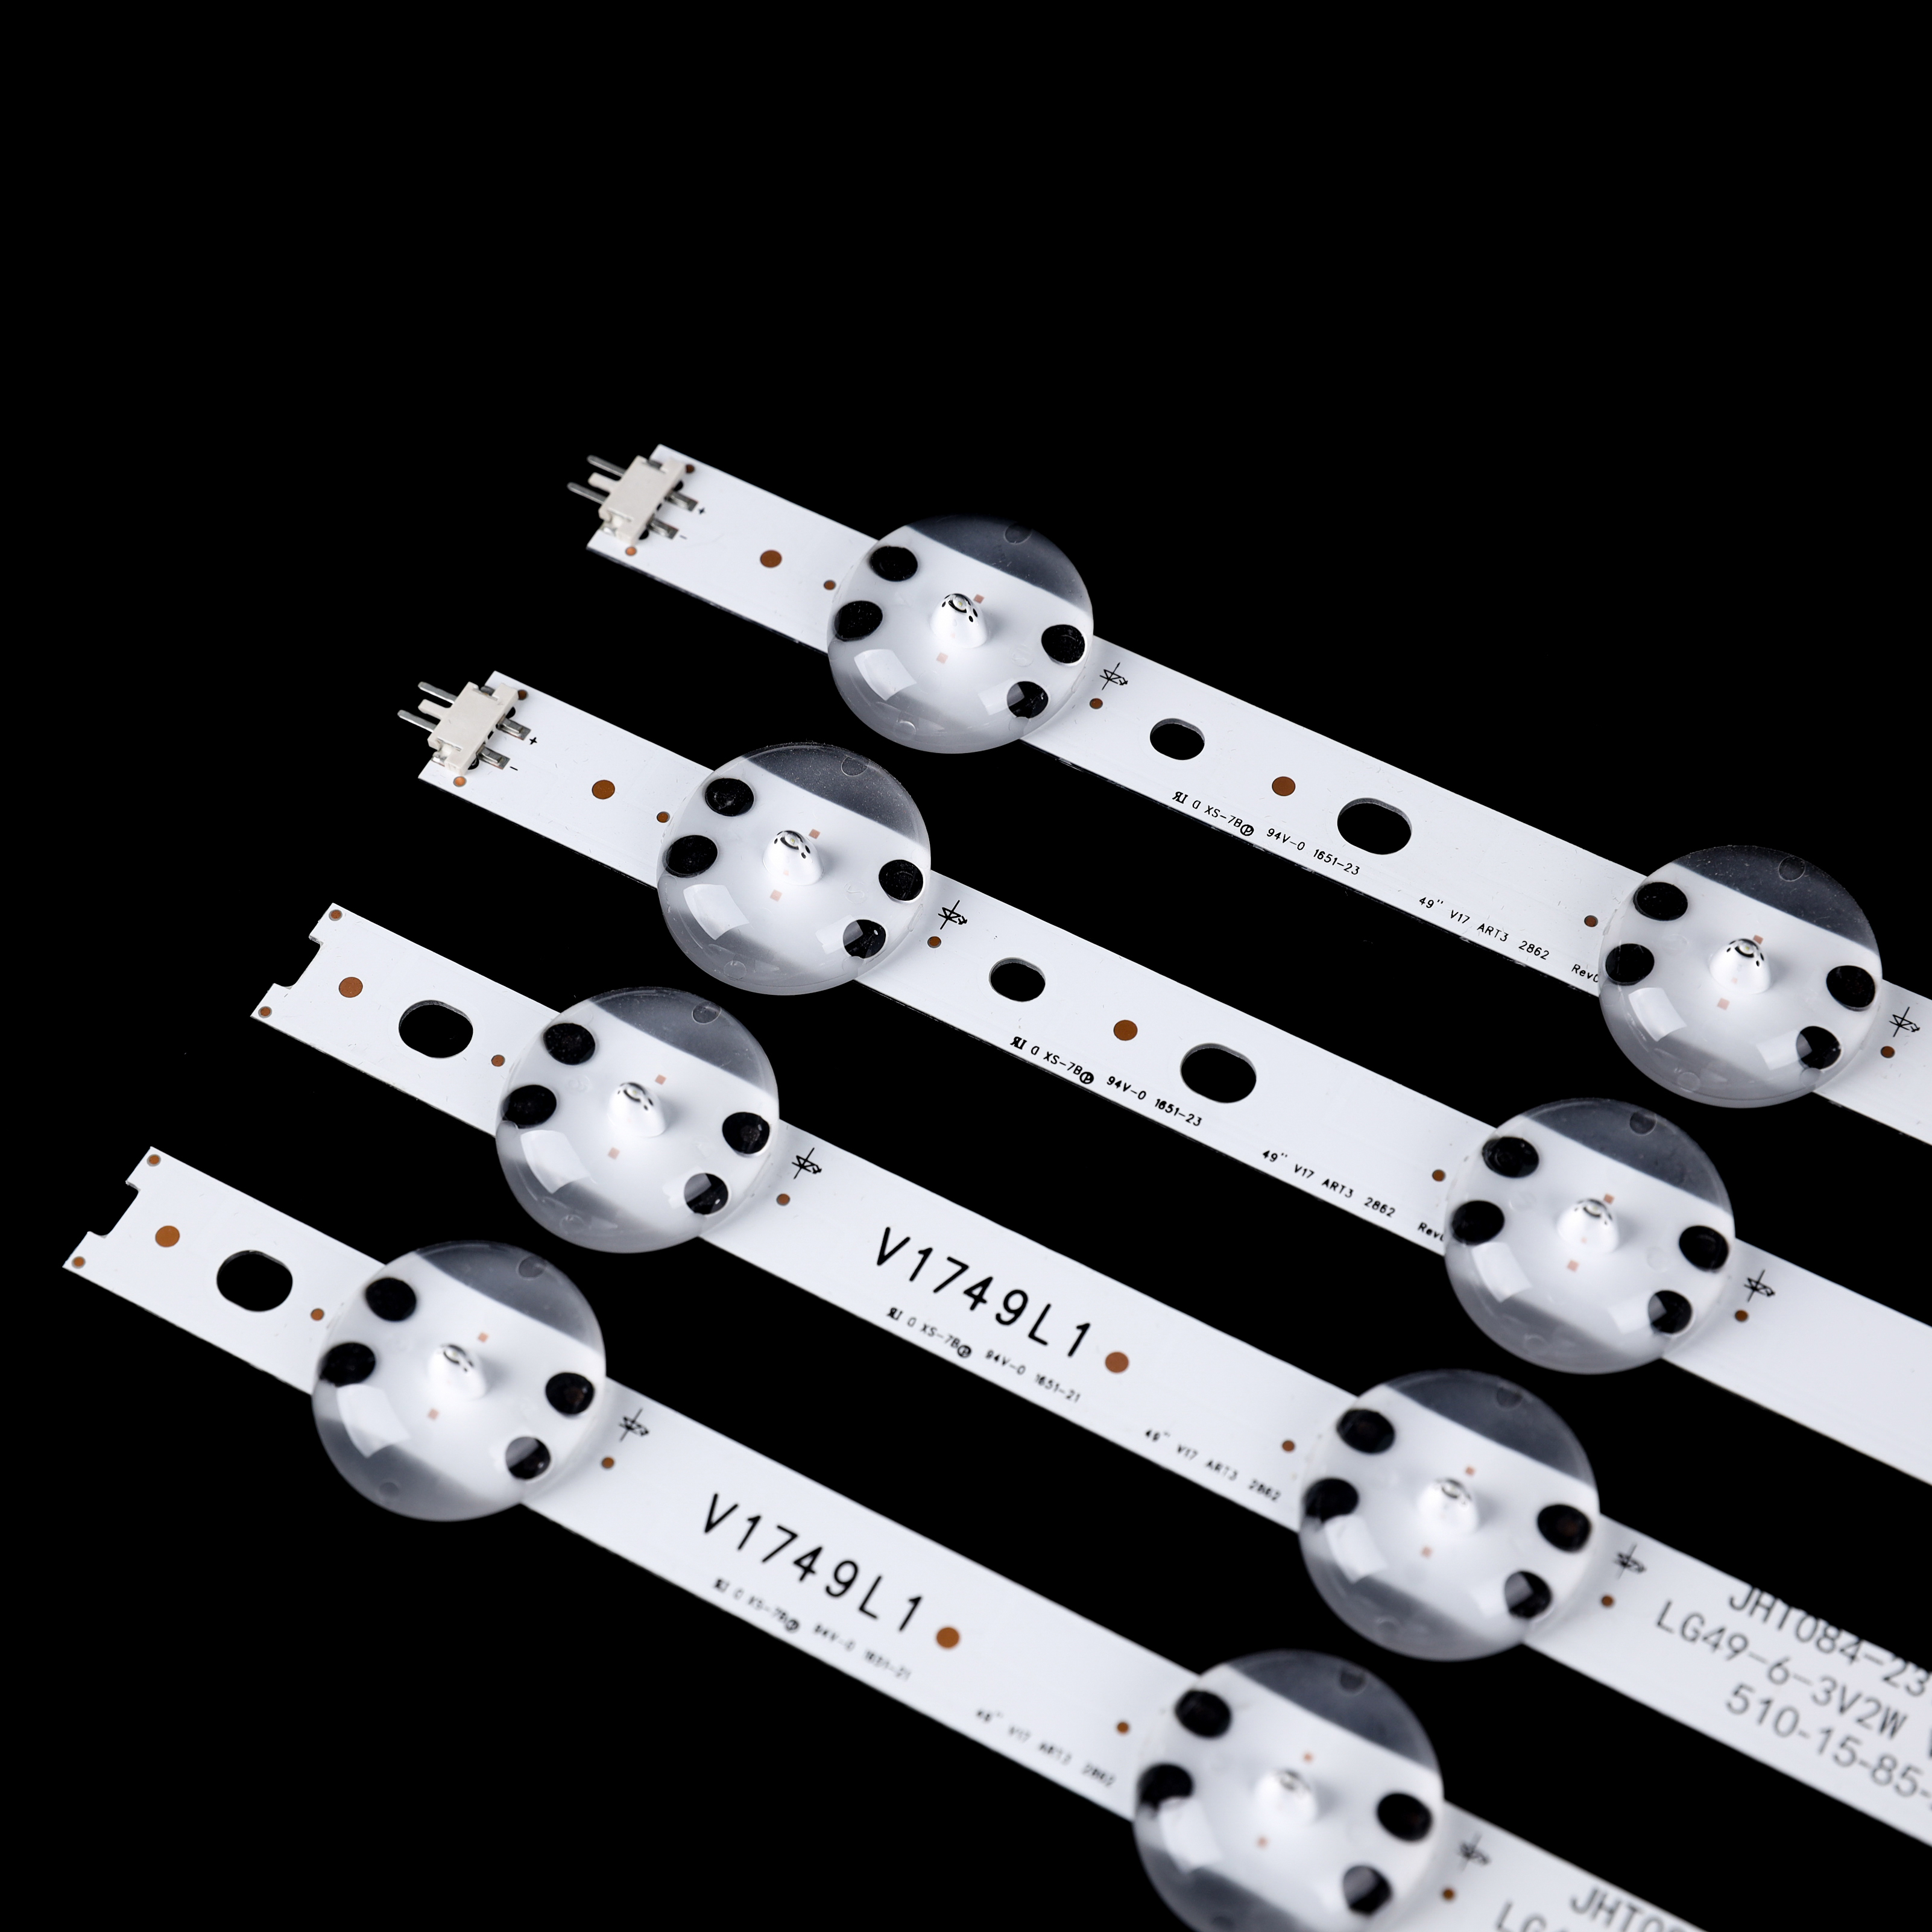 LED Backlight strips 10leds 3v2w 1pcs 510*15mm JHT082 factory price good quality hot lcd bar 